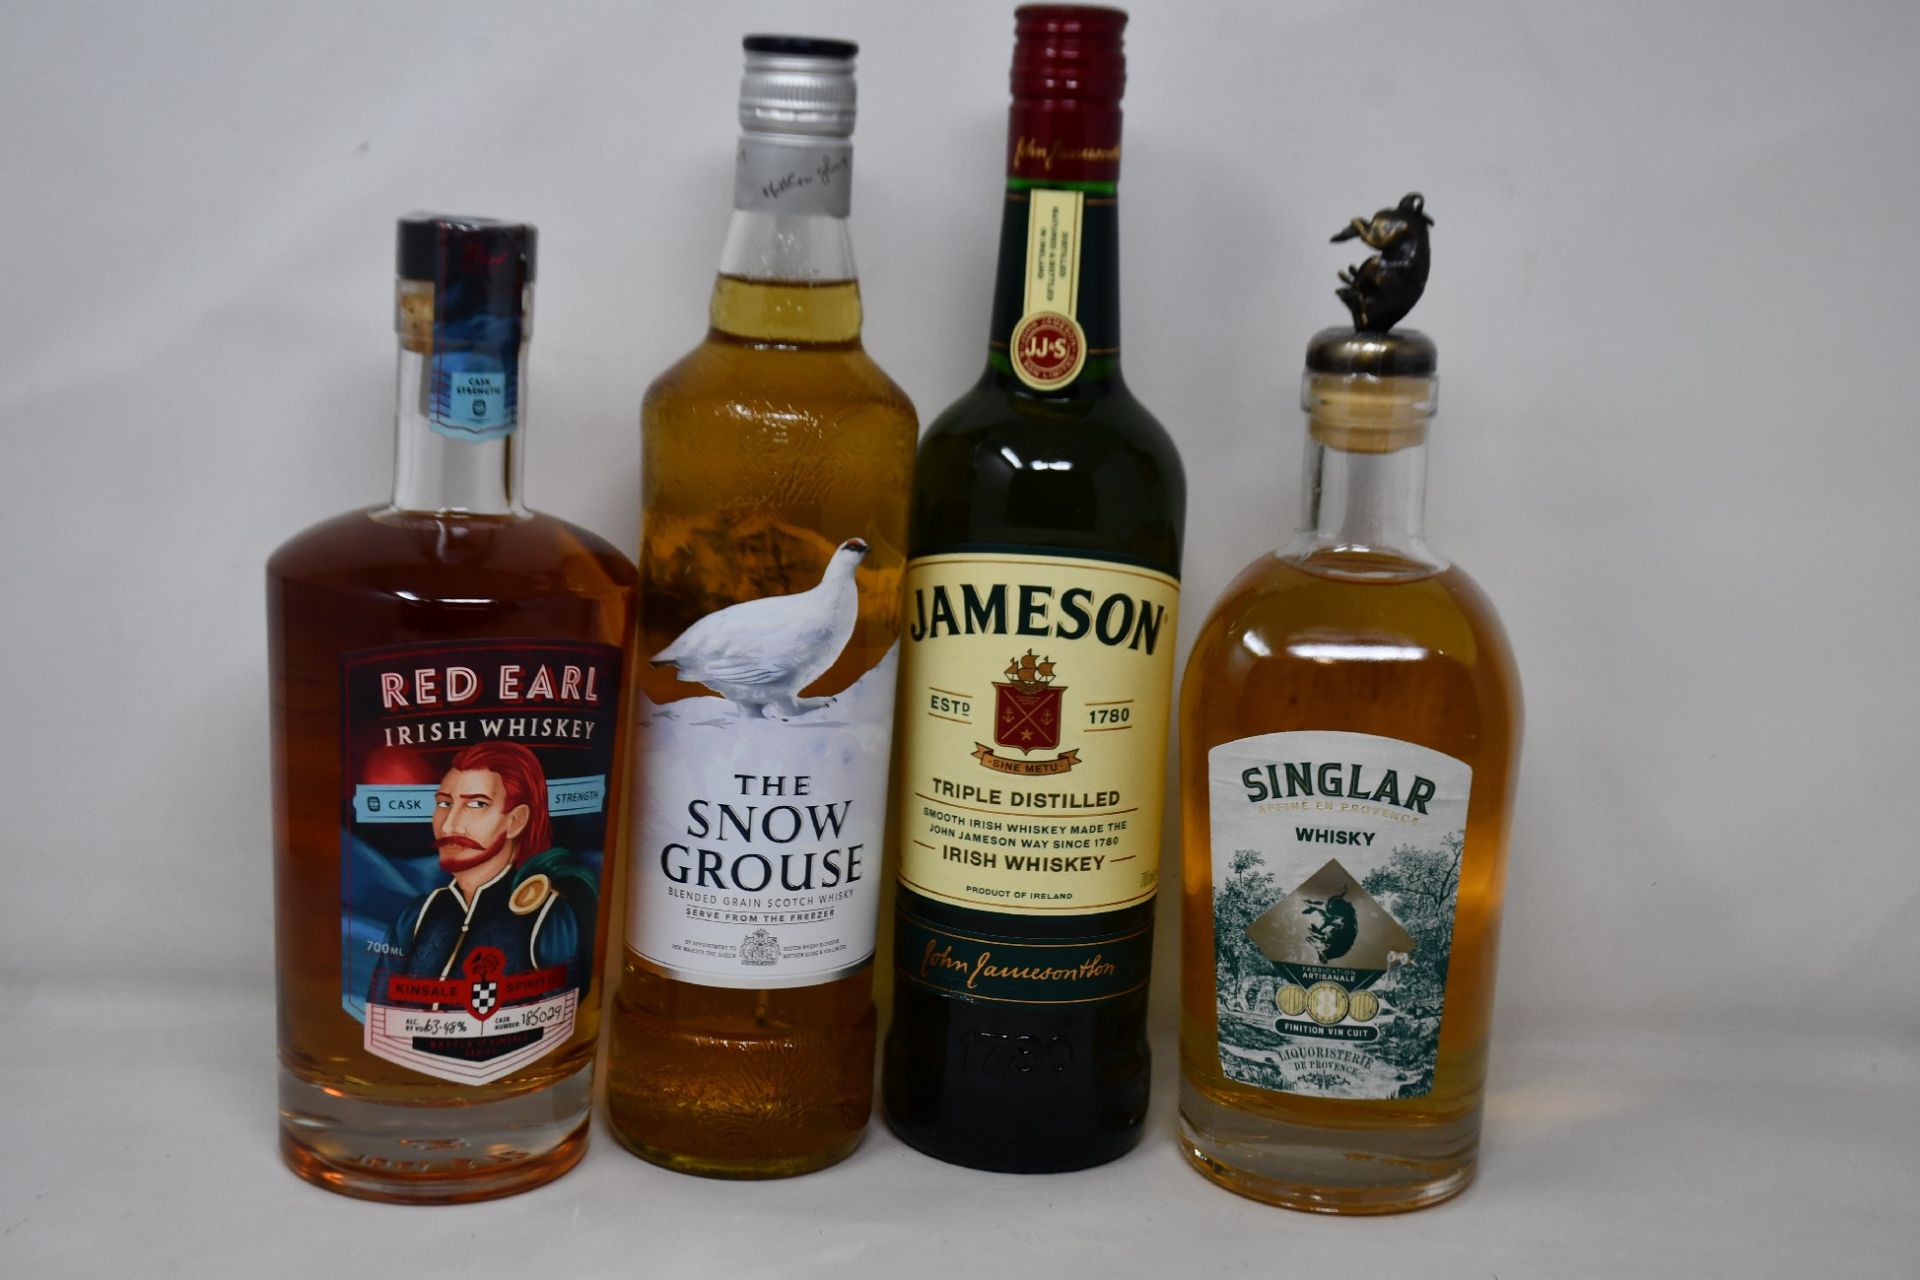 A bottle of Jameson Triple Distilled Irish whiskey (700ml), a bottle of Red Earl Irish whiskey (